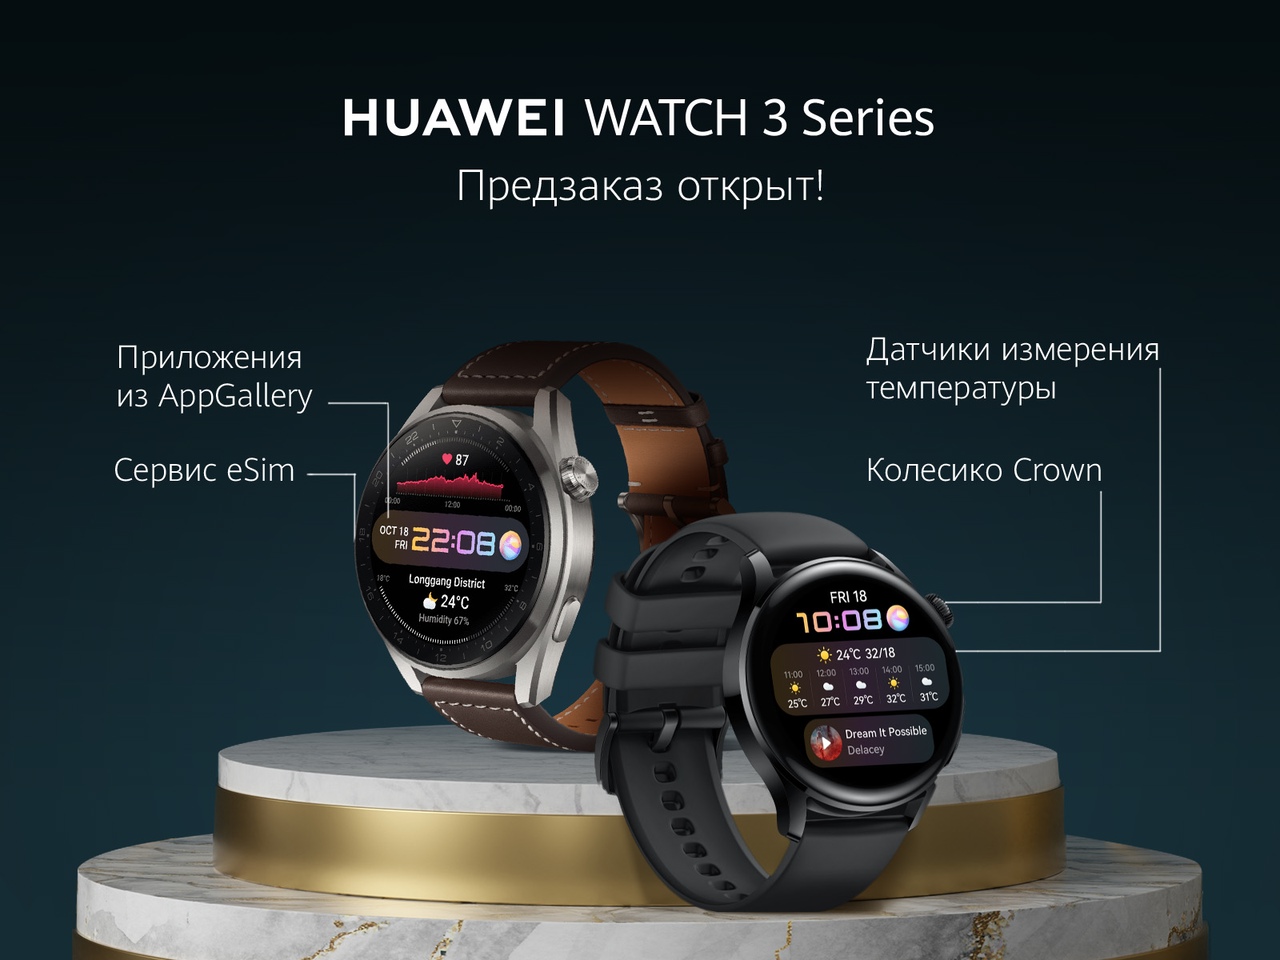 Хуавей вотч программа. Смарт часы Хуавей 3. Часы Хуавей вотч 3. Huawei Smart watch 3 Pro. Huawei watch 3 Pro Elite Edition.